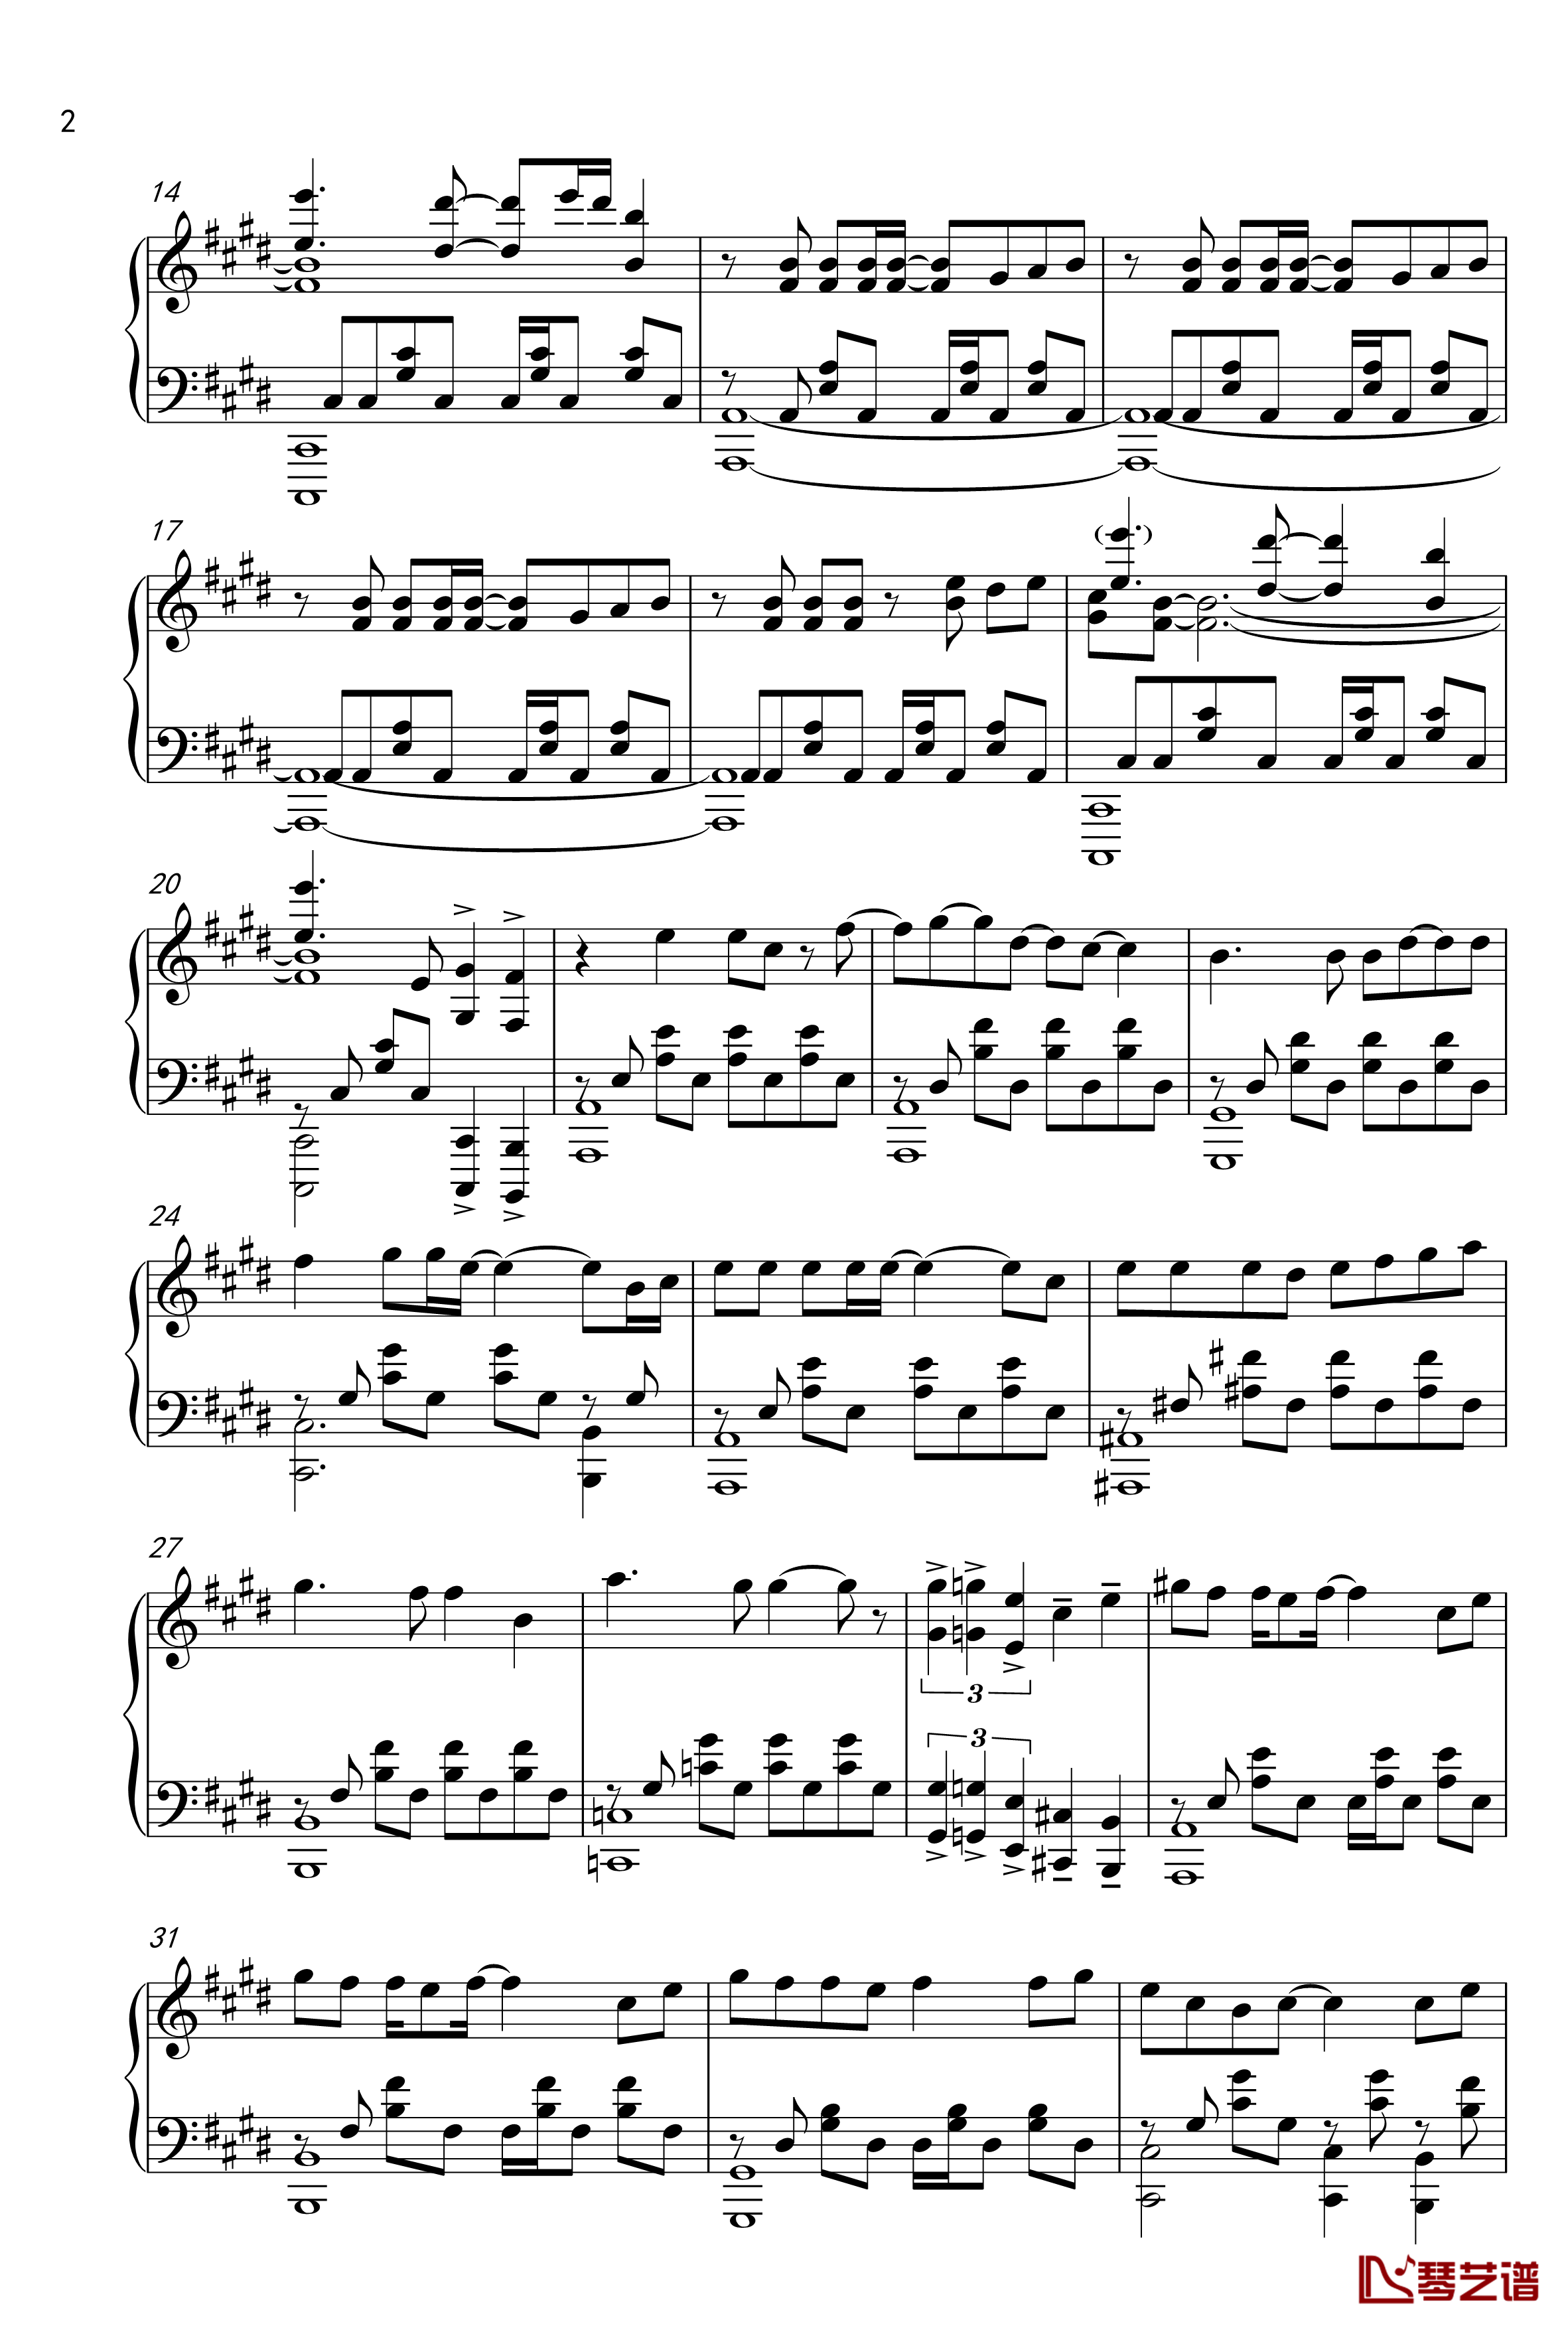 OVERLAP 钢琴谱-《游戏王》第一部190-224话OP-游戏王2